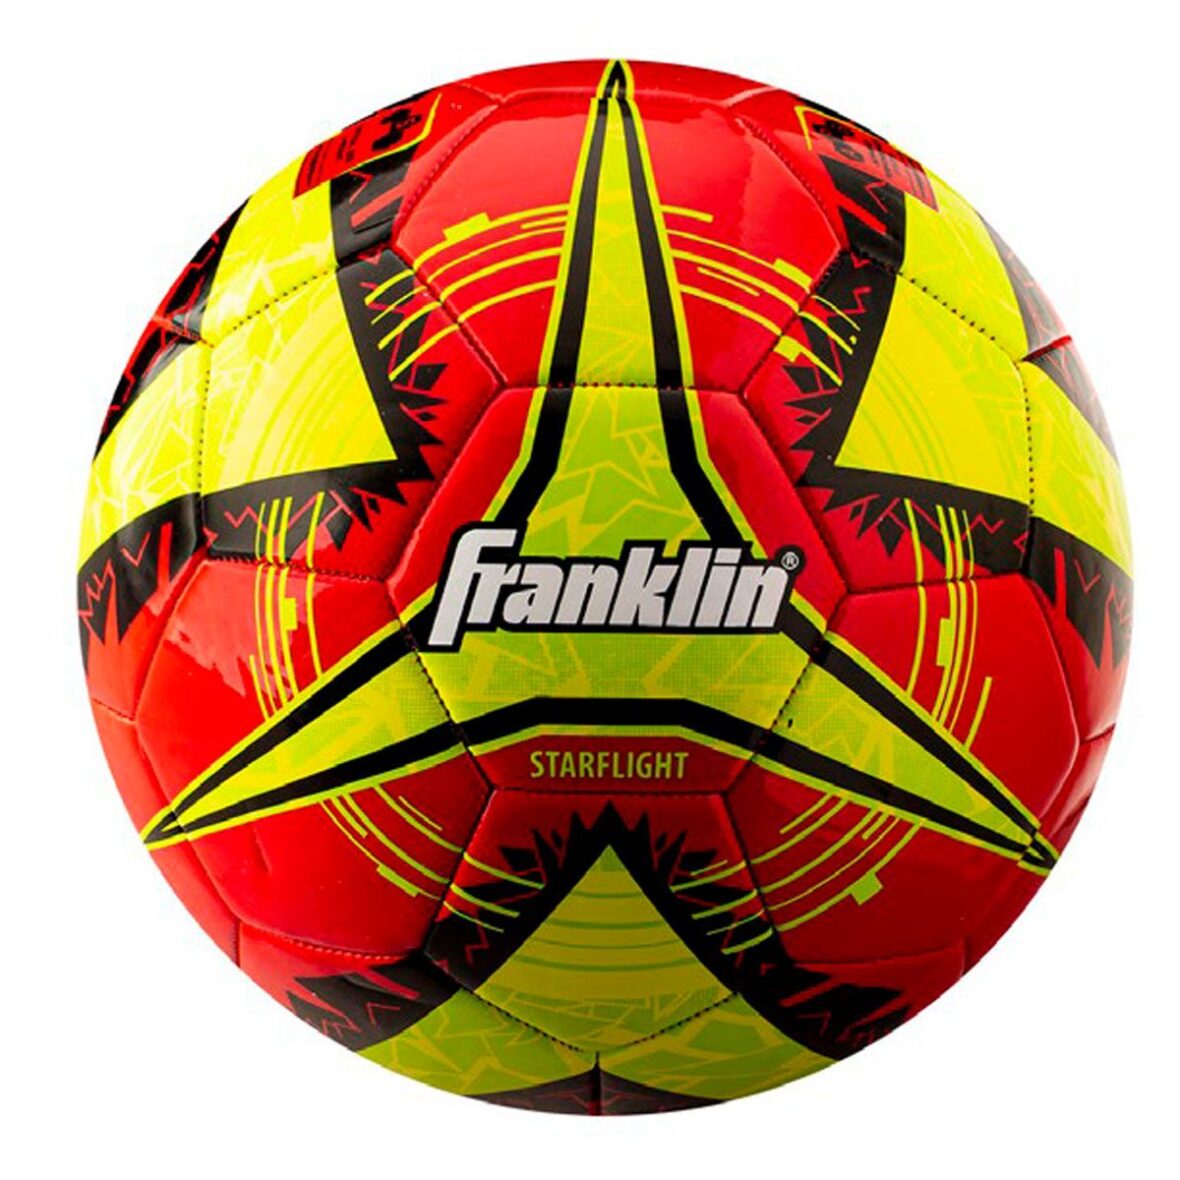 Franklin Starflight Soccer ball red yellow- size 5